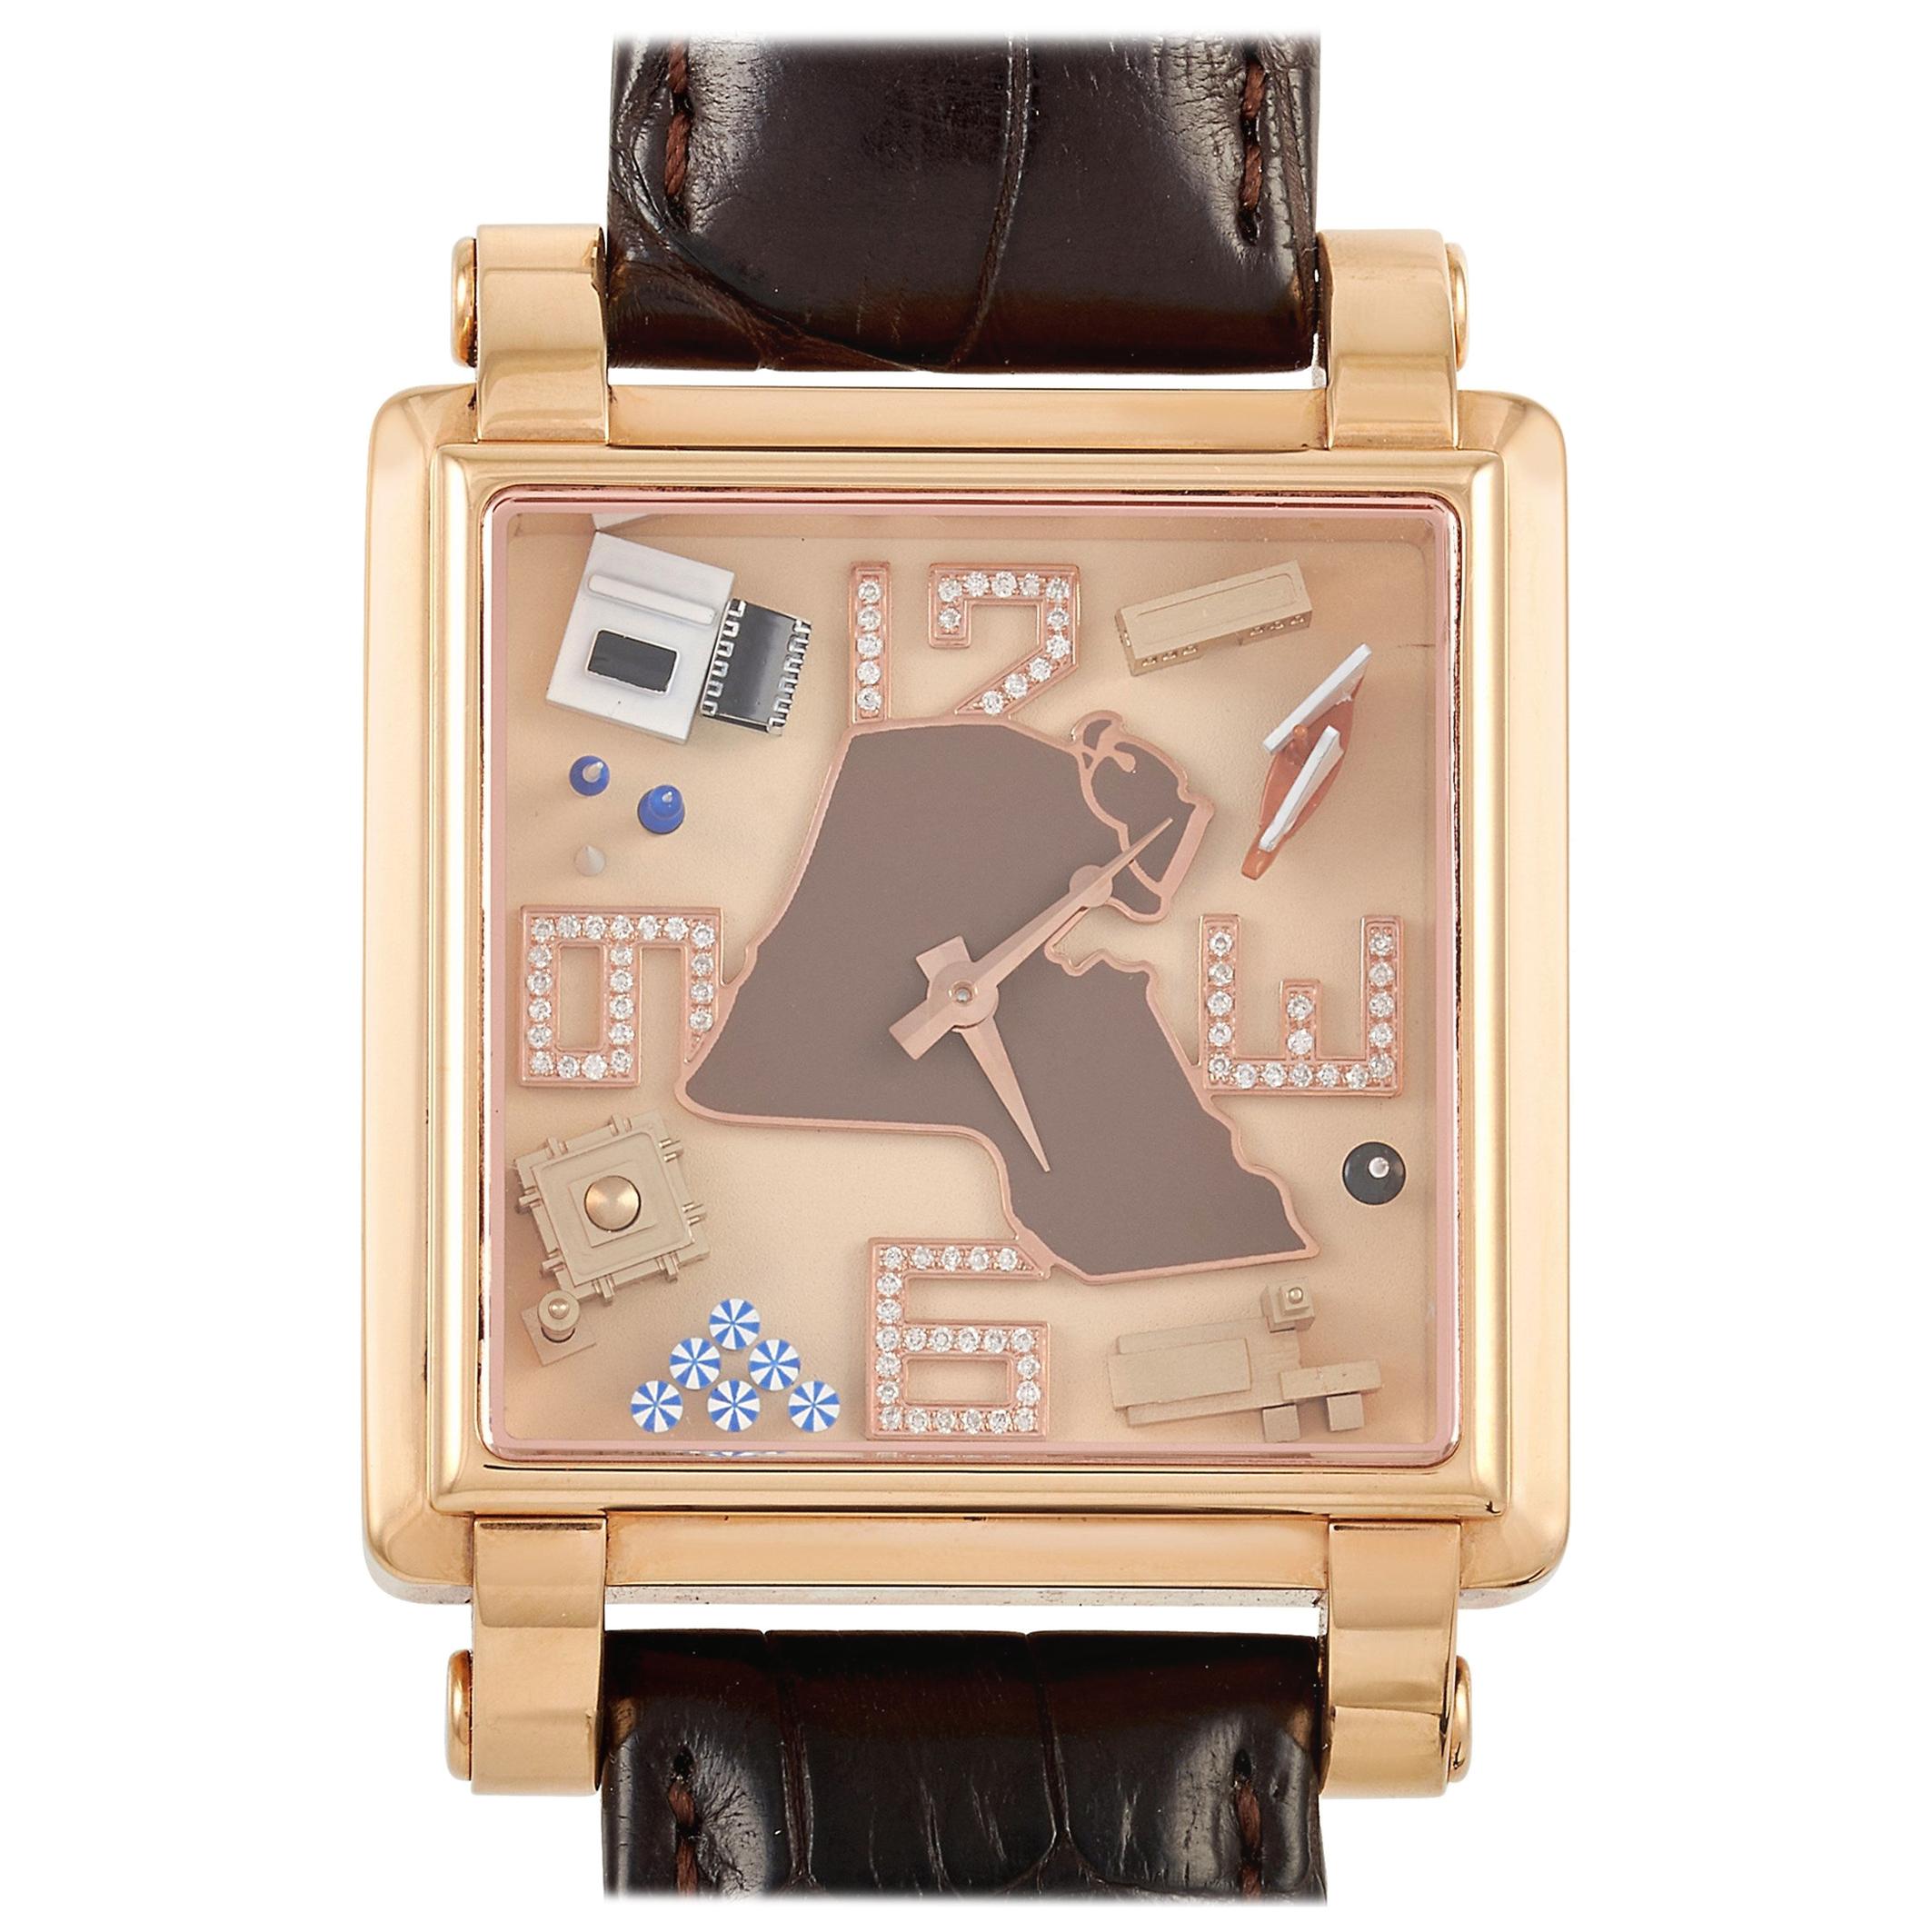 Jacob & Co. “Kuwait” Limited Edition 18 Karat Rose Gold Watch